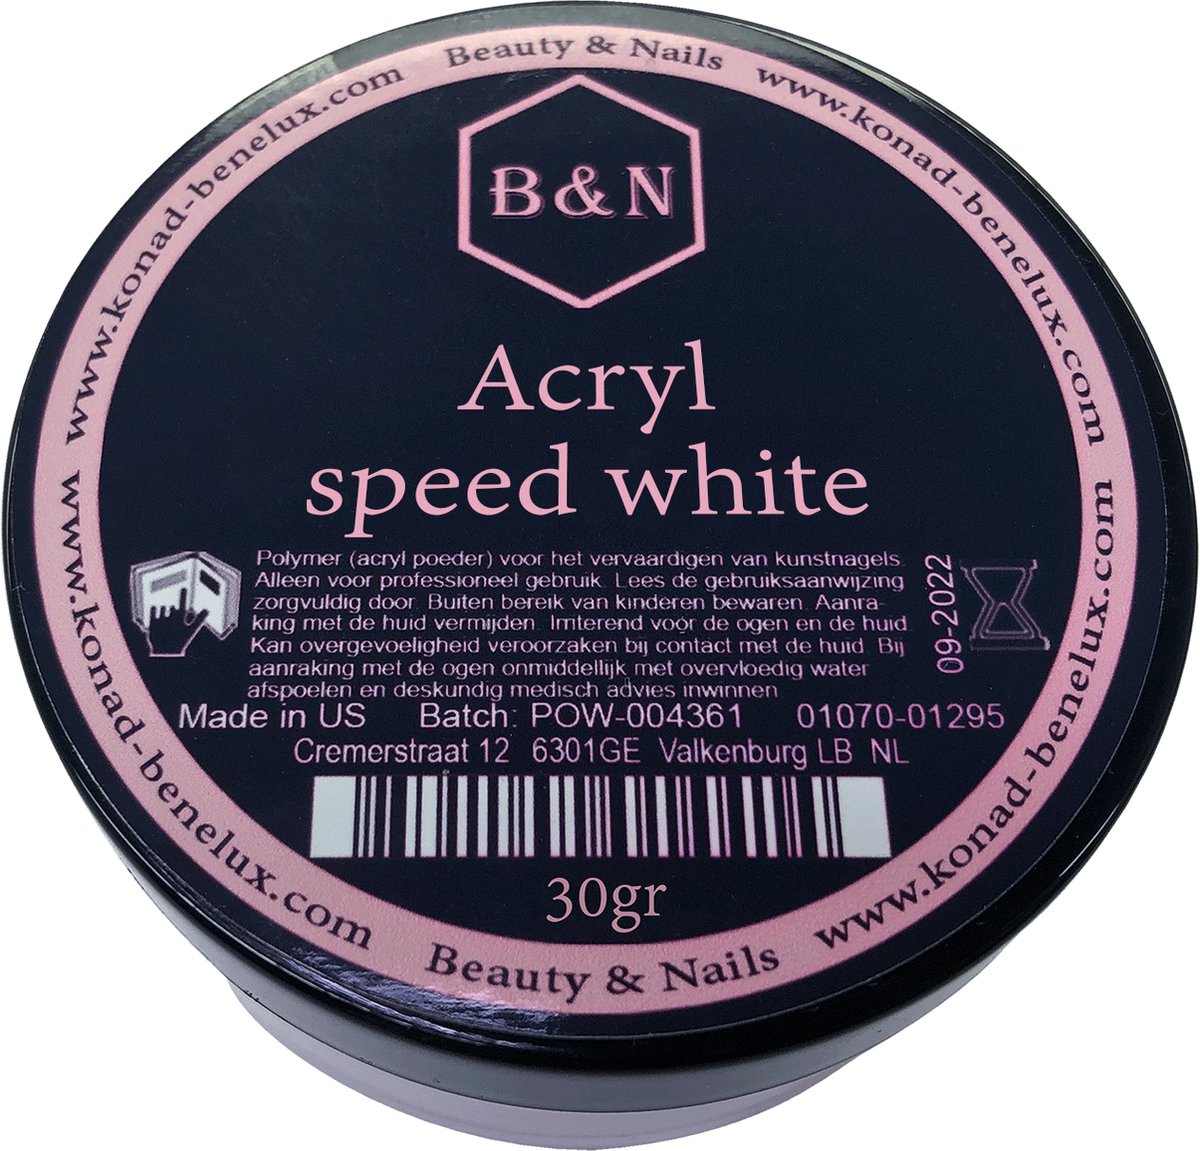 Acryl - speed white - 30 gr | B&N - acrylpoeder - VEGAN - acrylpoeder